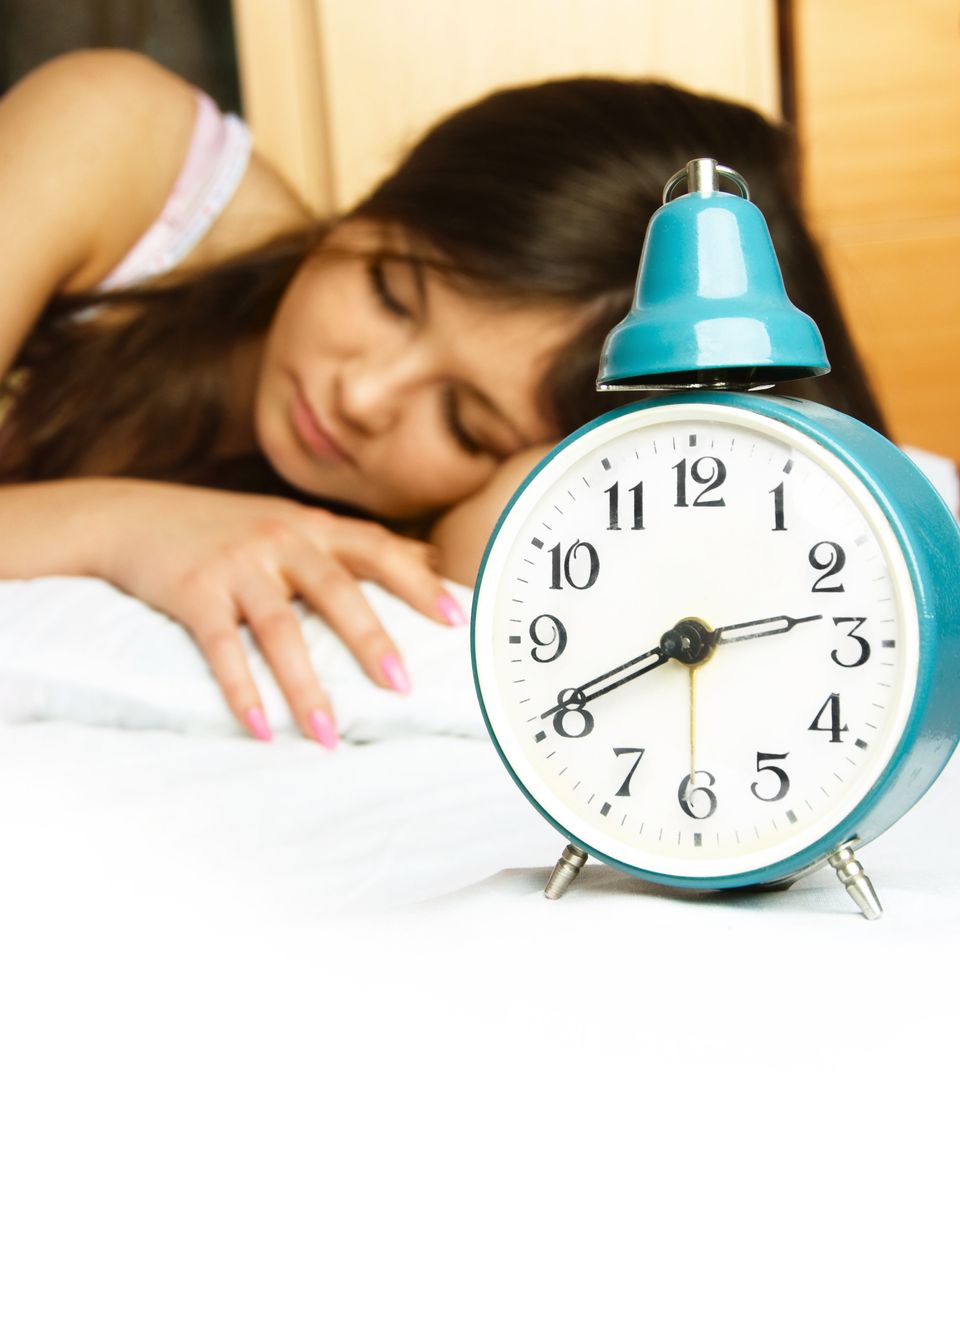 An All-Nighter vs. 2 Hours Of Sleep